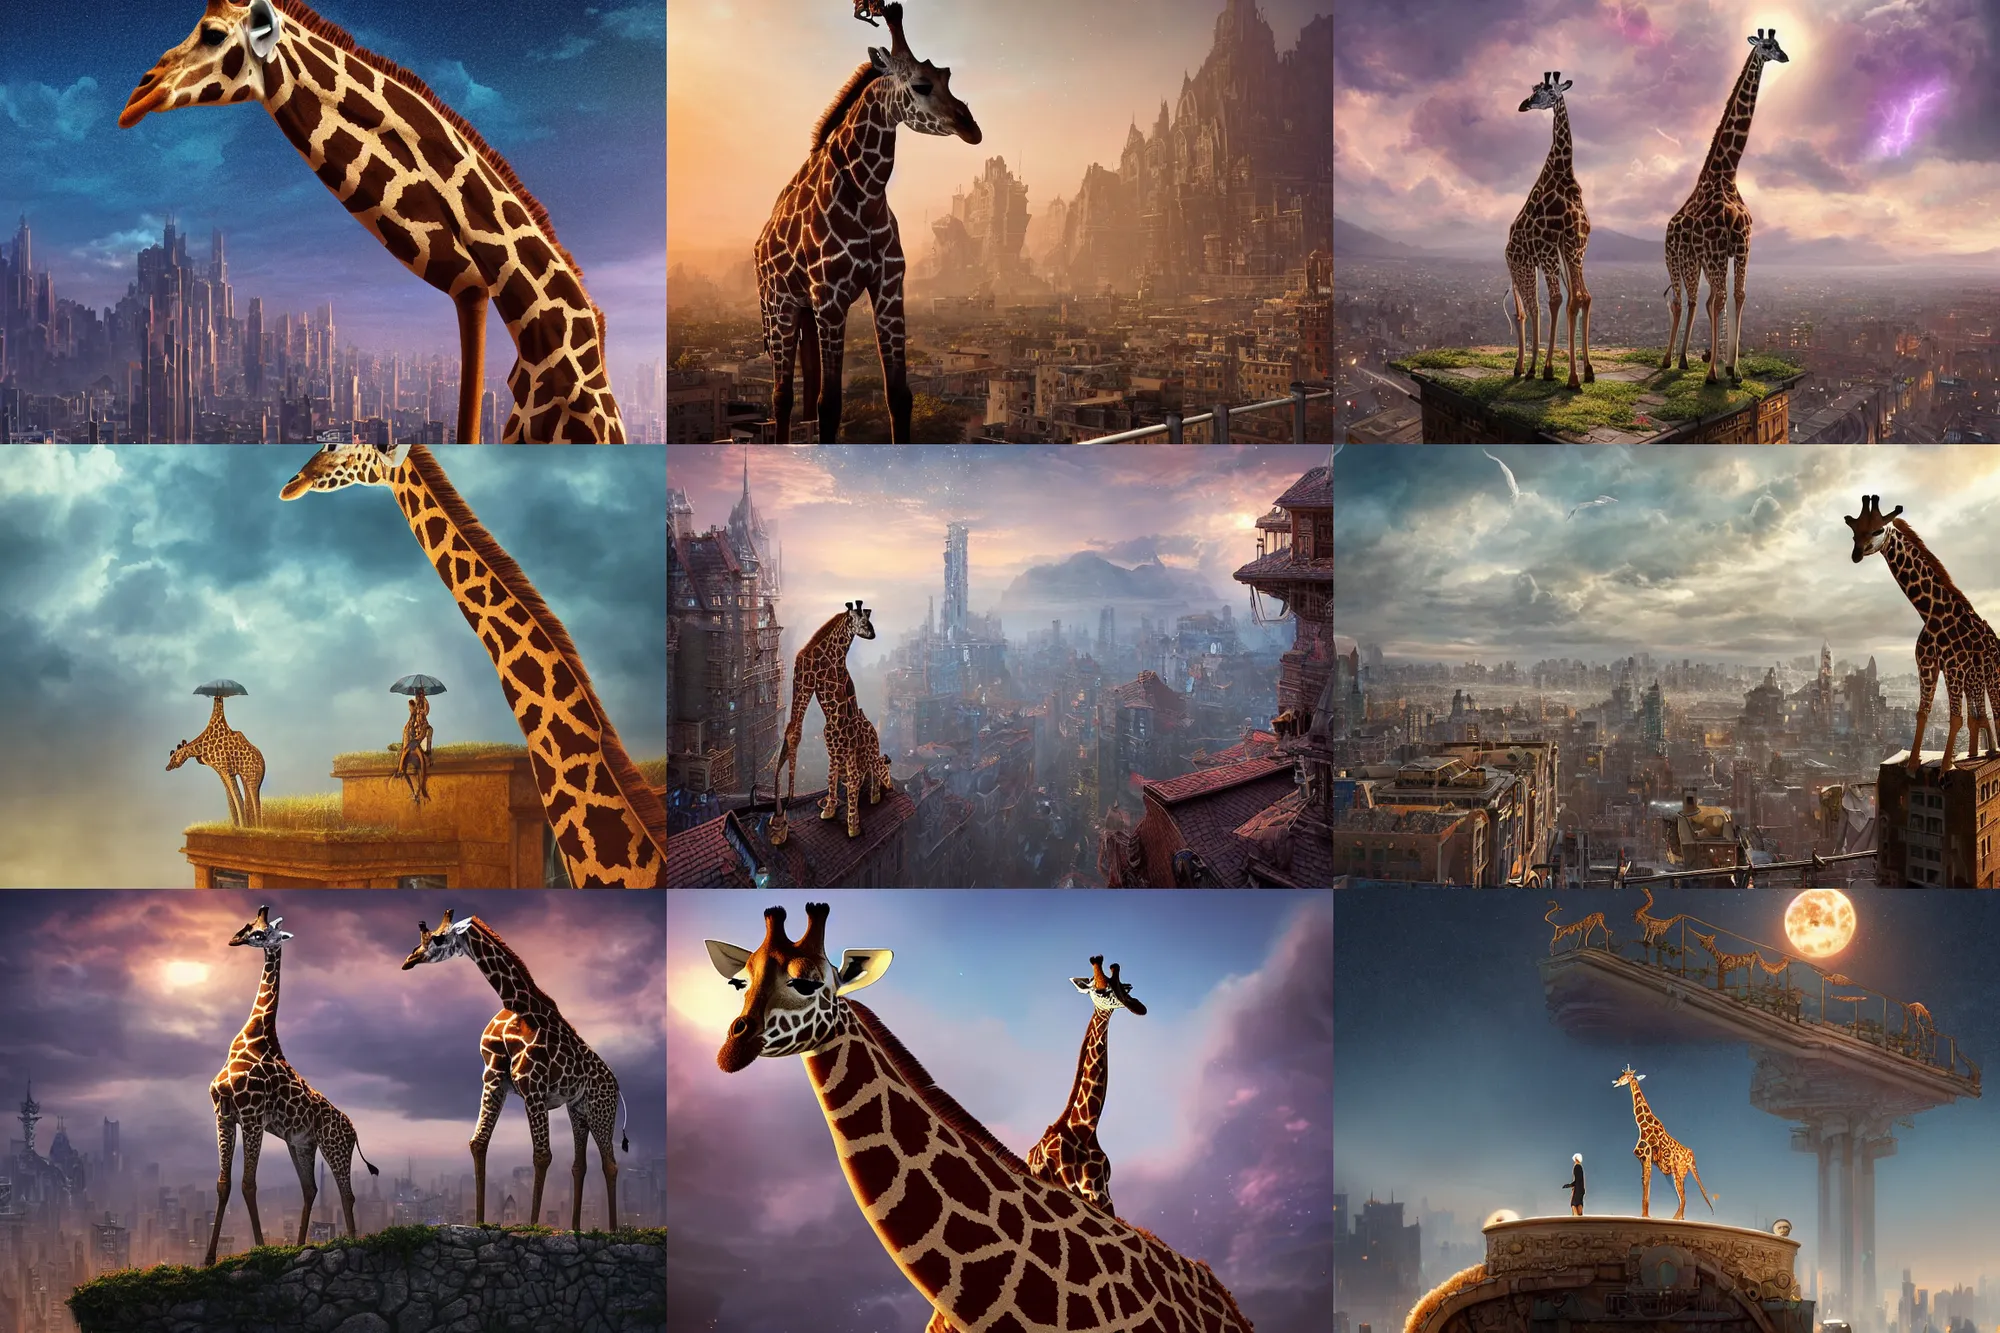 Prompt: giraffe standing on the rooftop, fantasy, dream, intricate, epic lighting, cinematic composition, hyper realistic, 8 k resolution, unreal engine 5, by artgerm, tooth wu, dan mumford, beeple, wlop, rossdraws, james jean, andrei riabovitchev, marc simonetti, yoshitaka amano, artstation